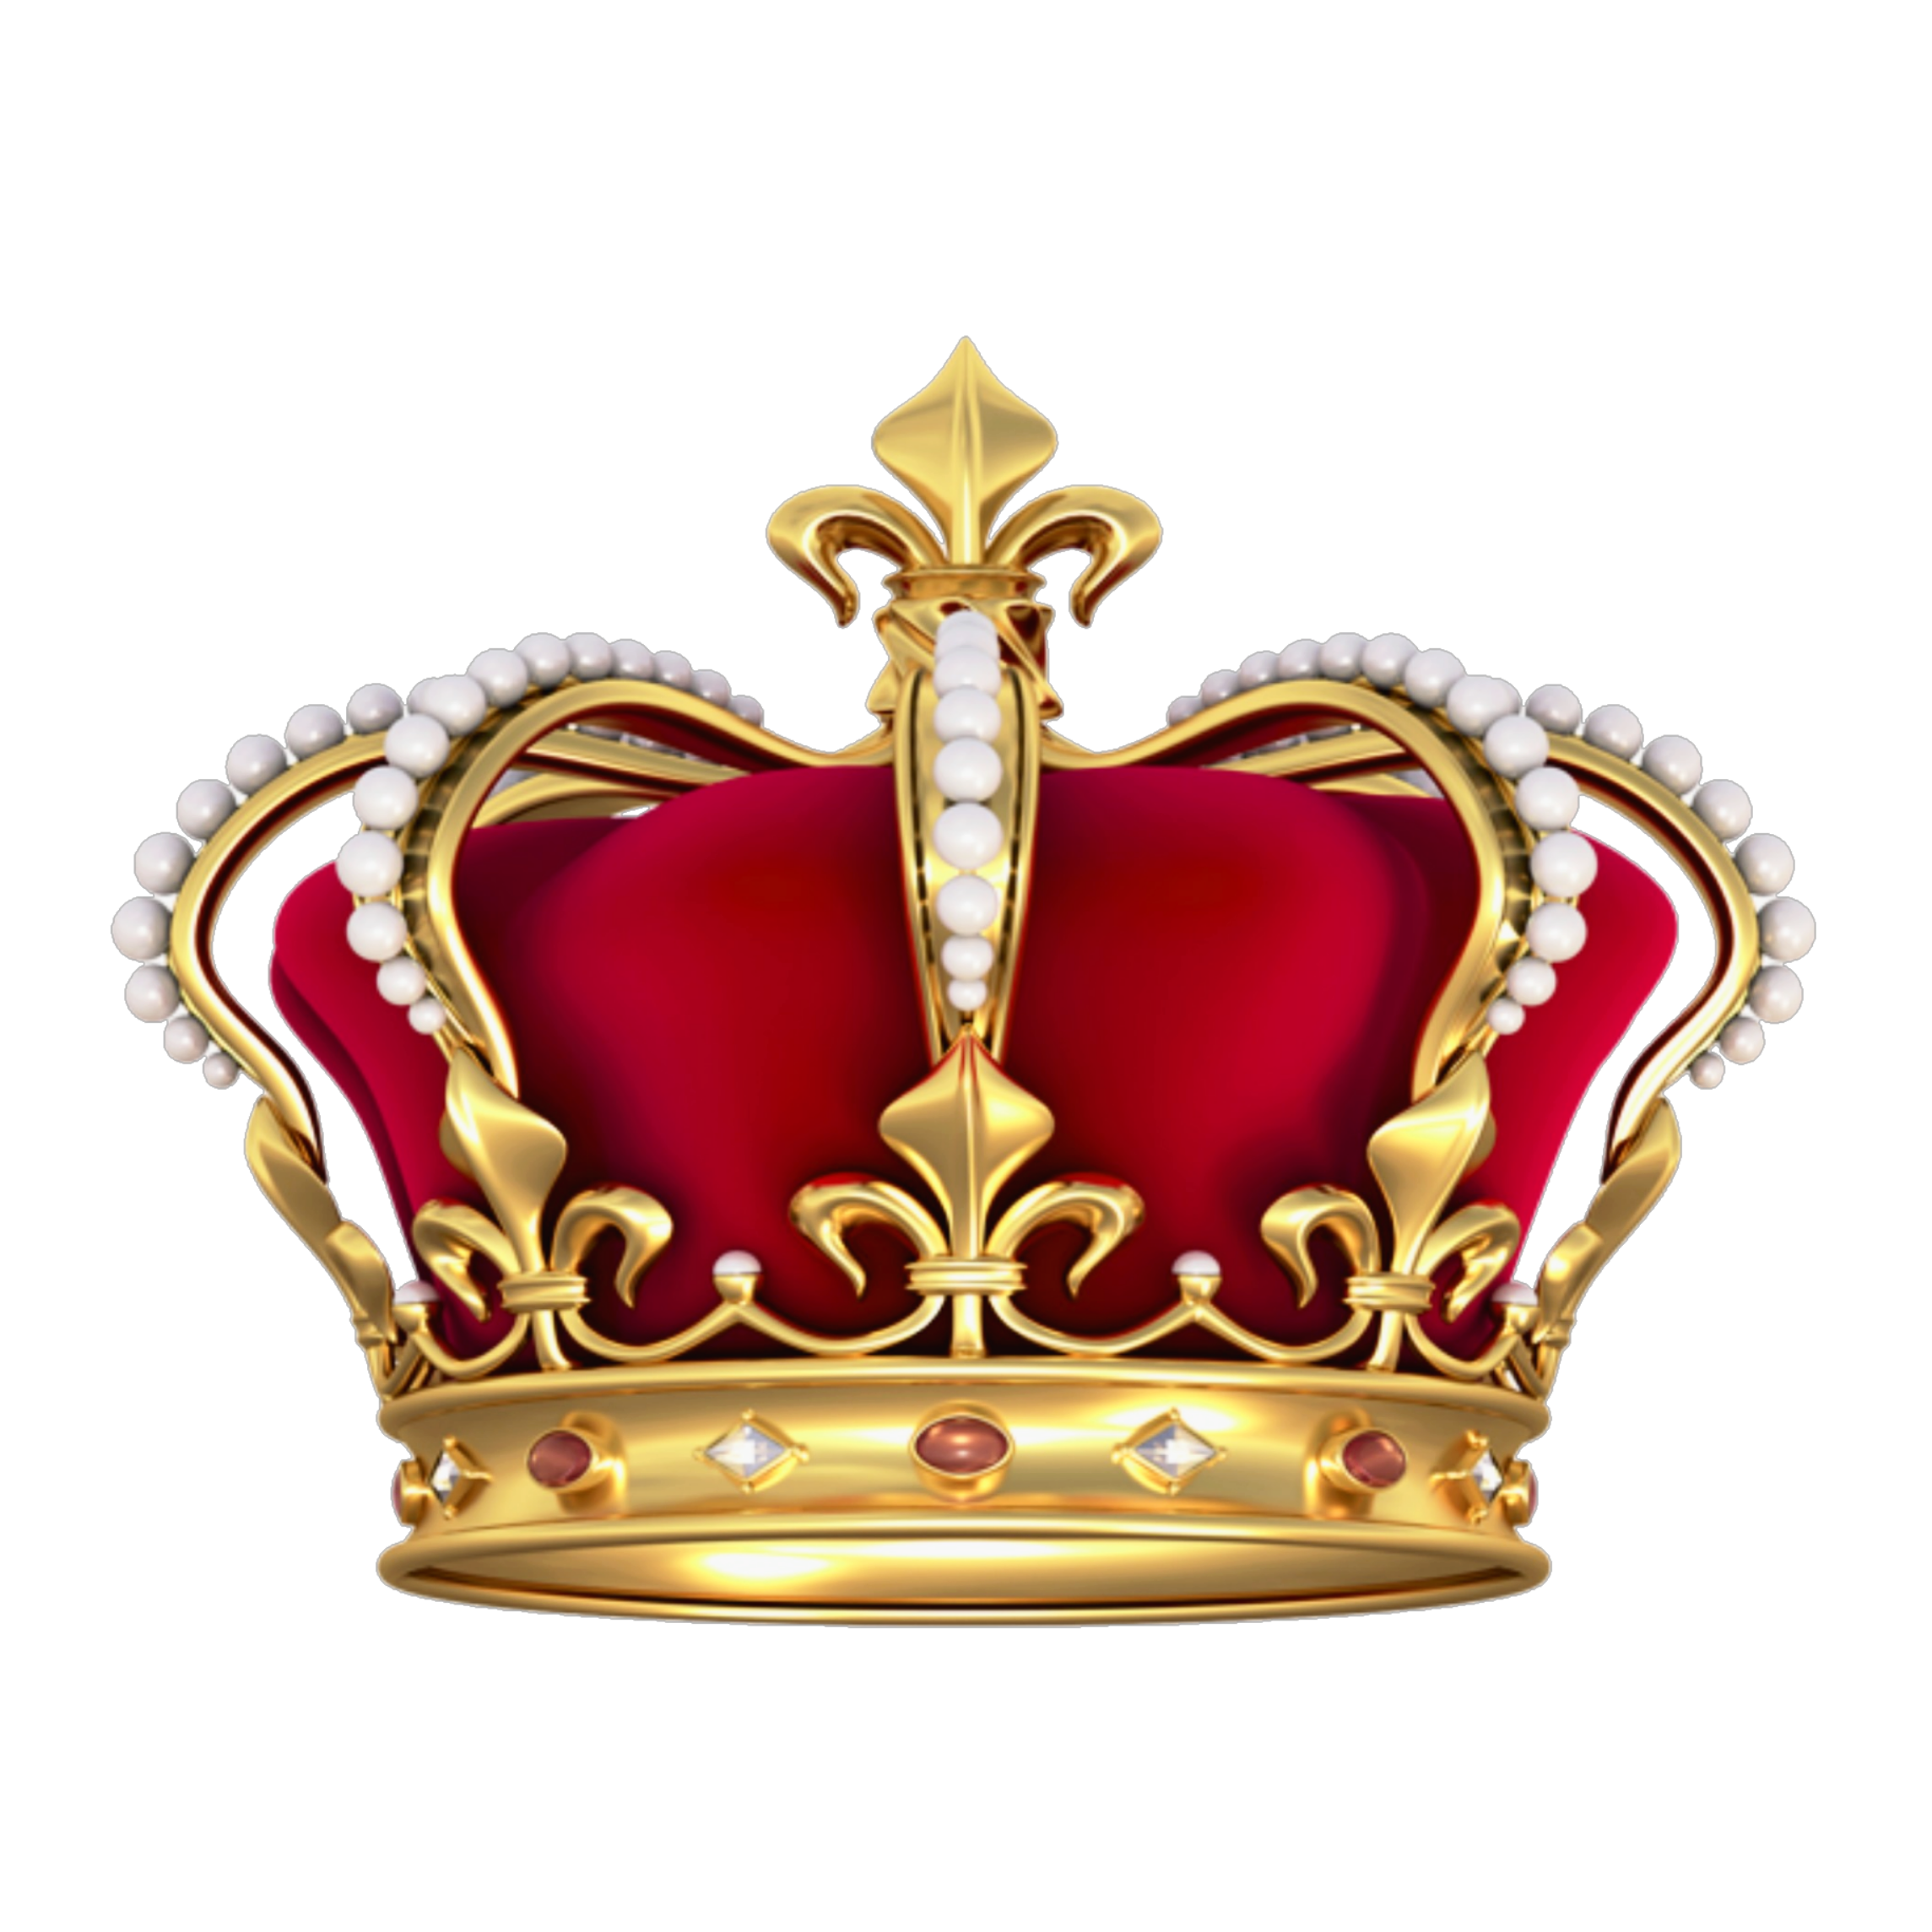 символ корона для ников пабг фото 110